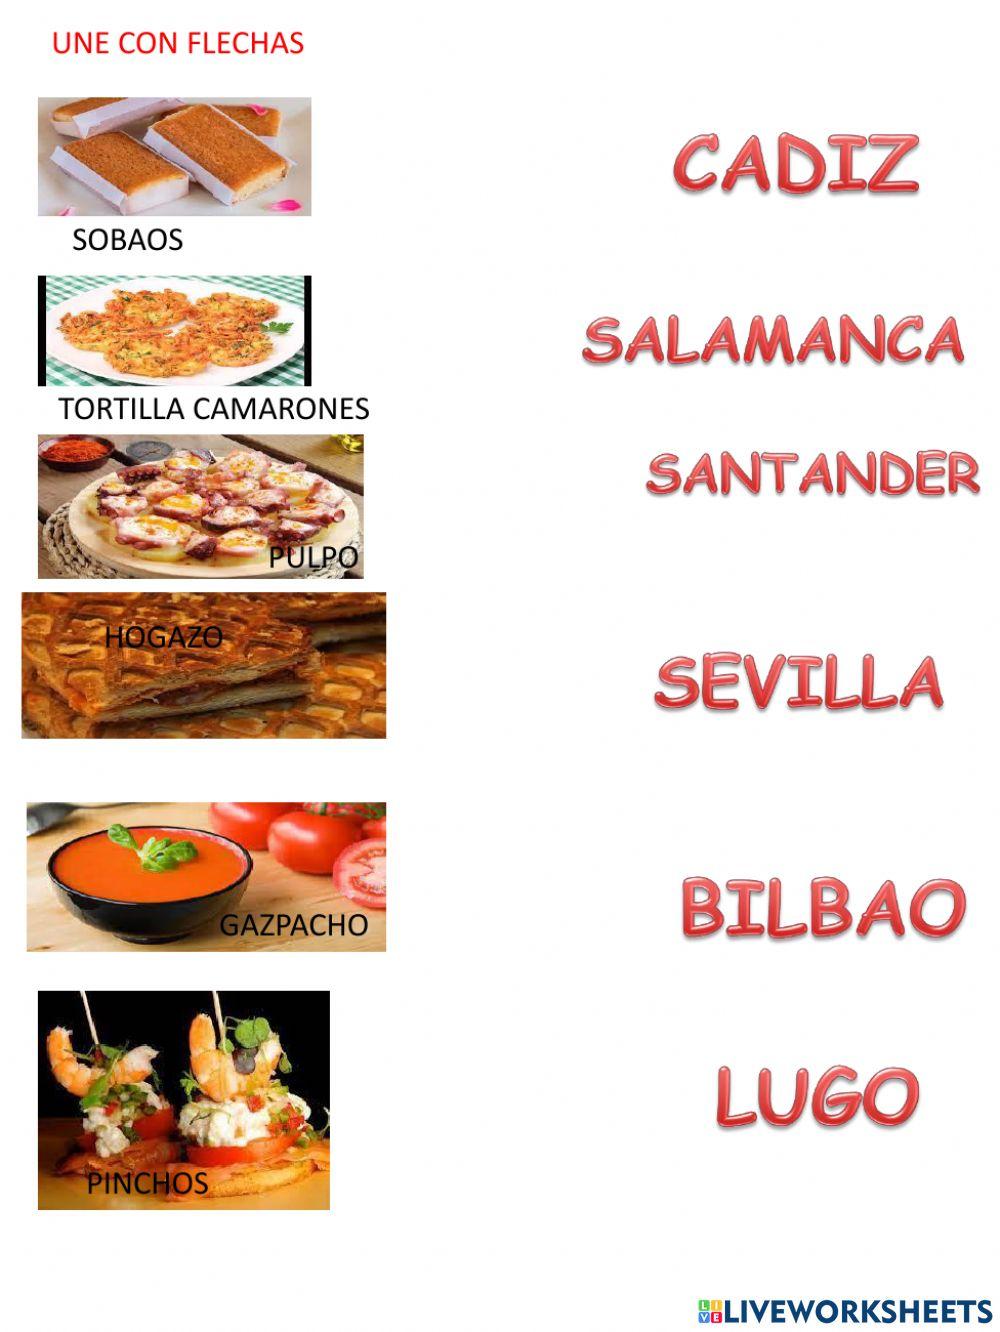 Sevilla, cadiz, lugo